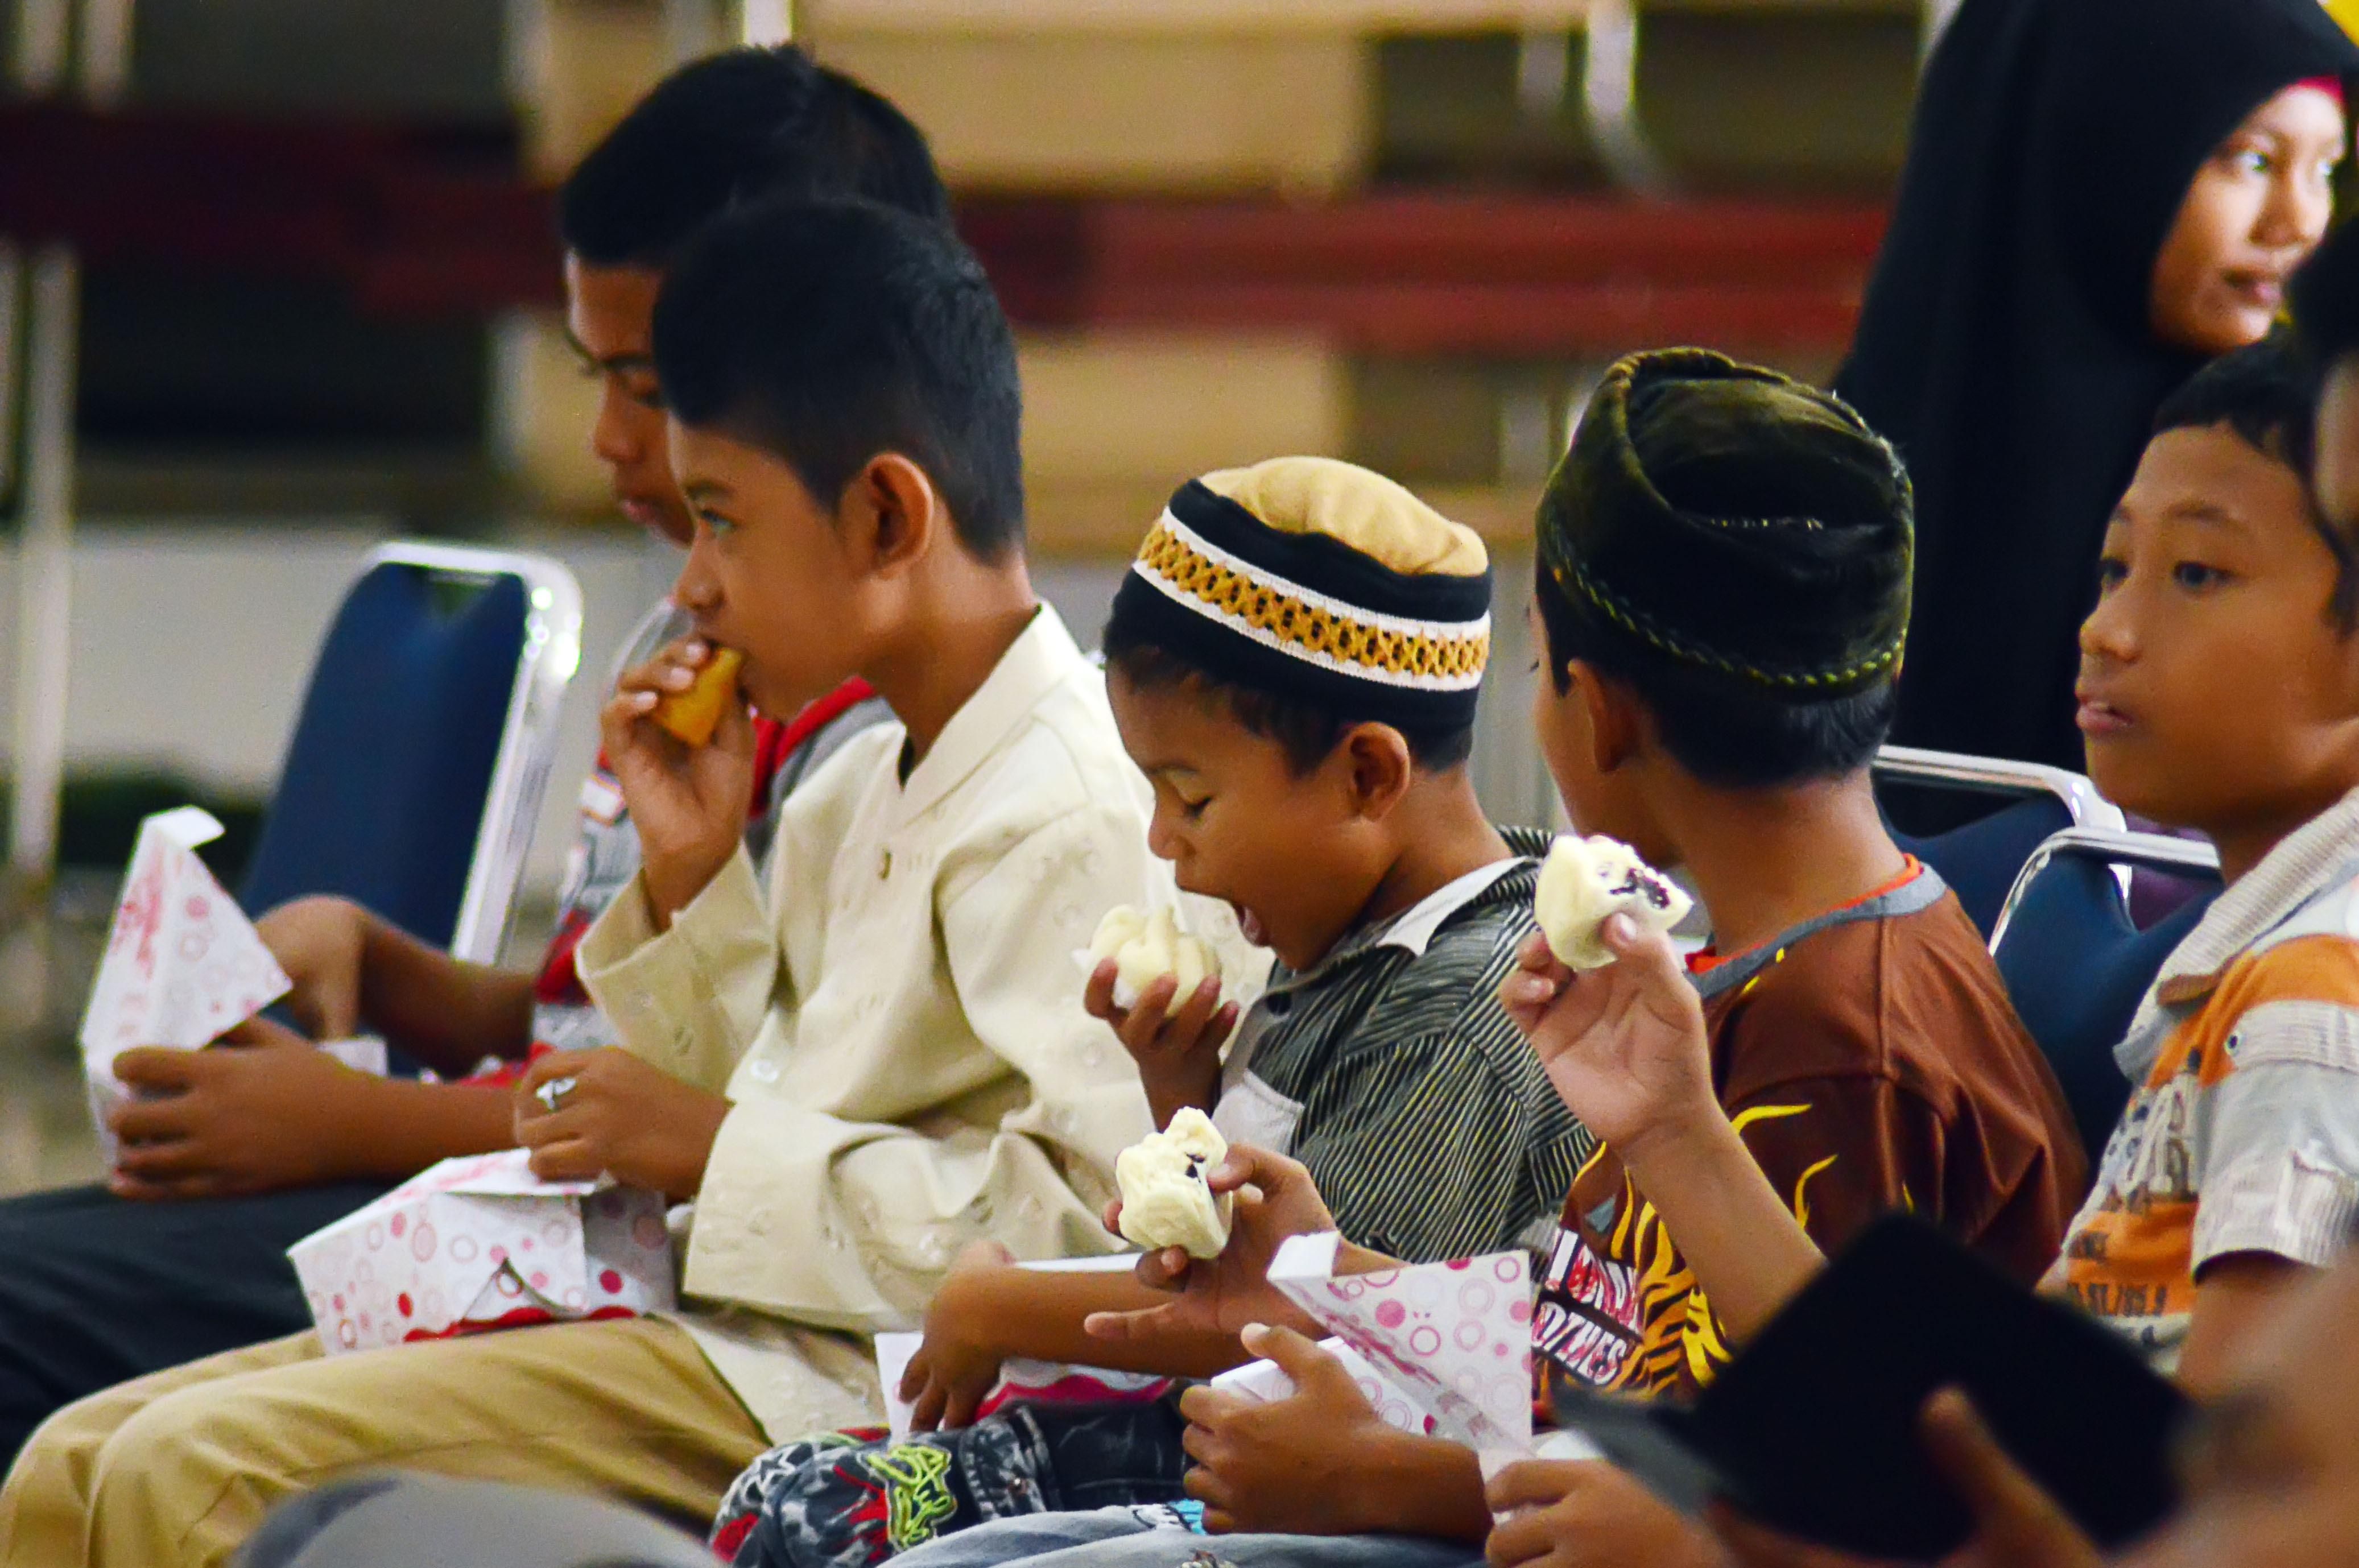 Berlalu La Sudah Ramadhan - Seve Ballesteros Foundation